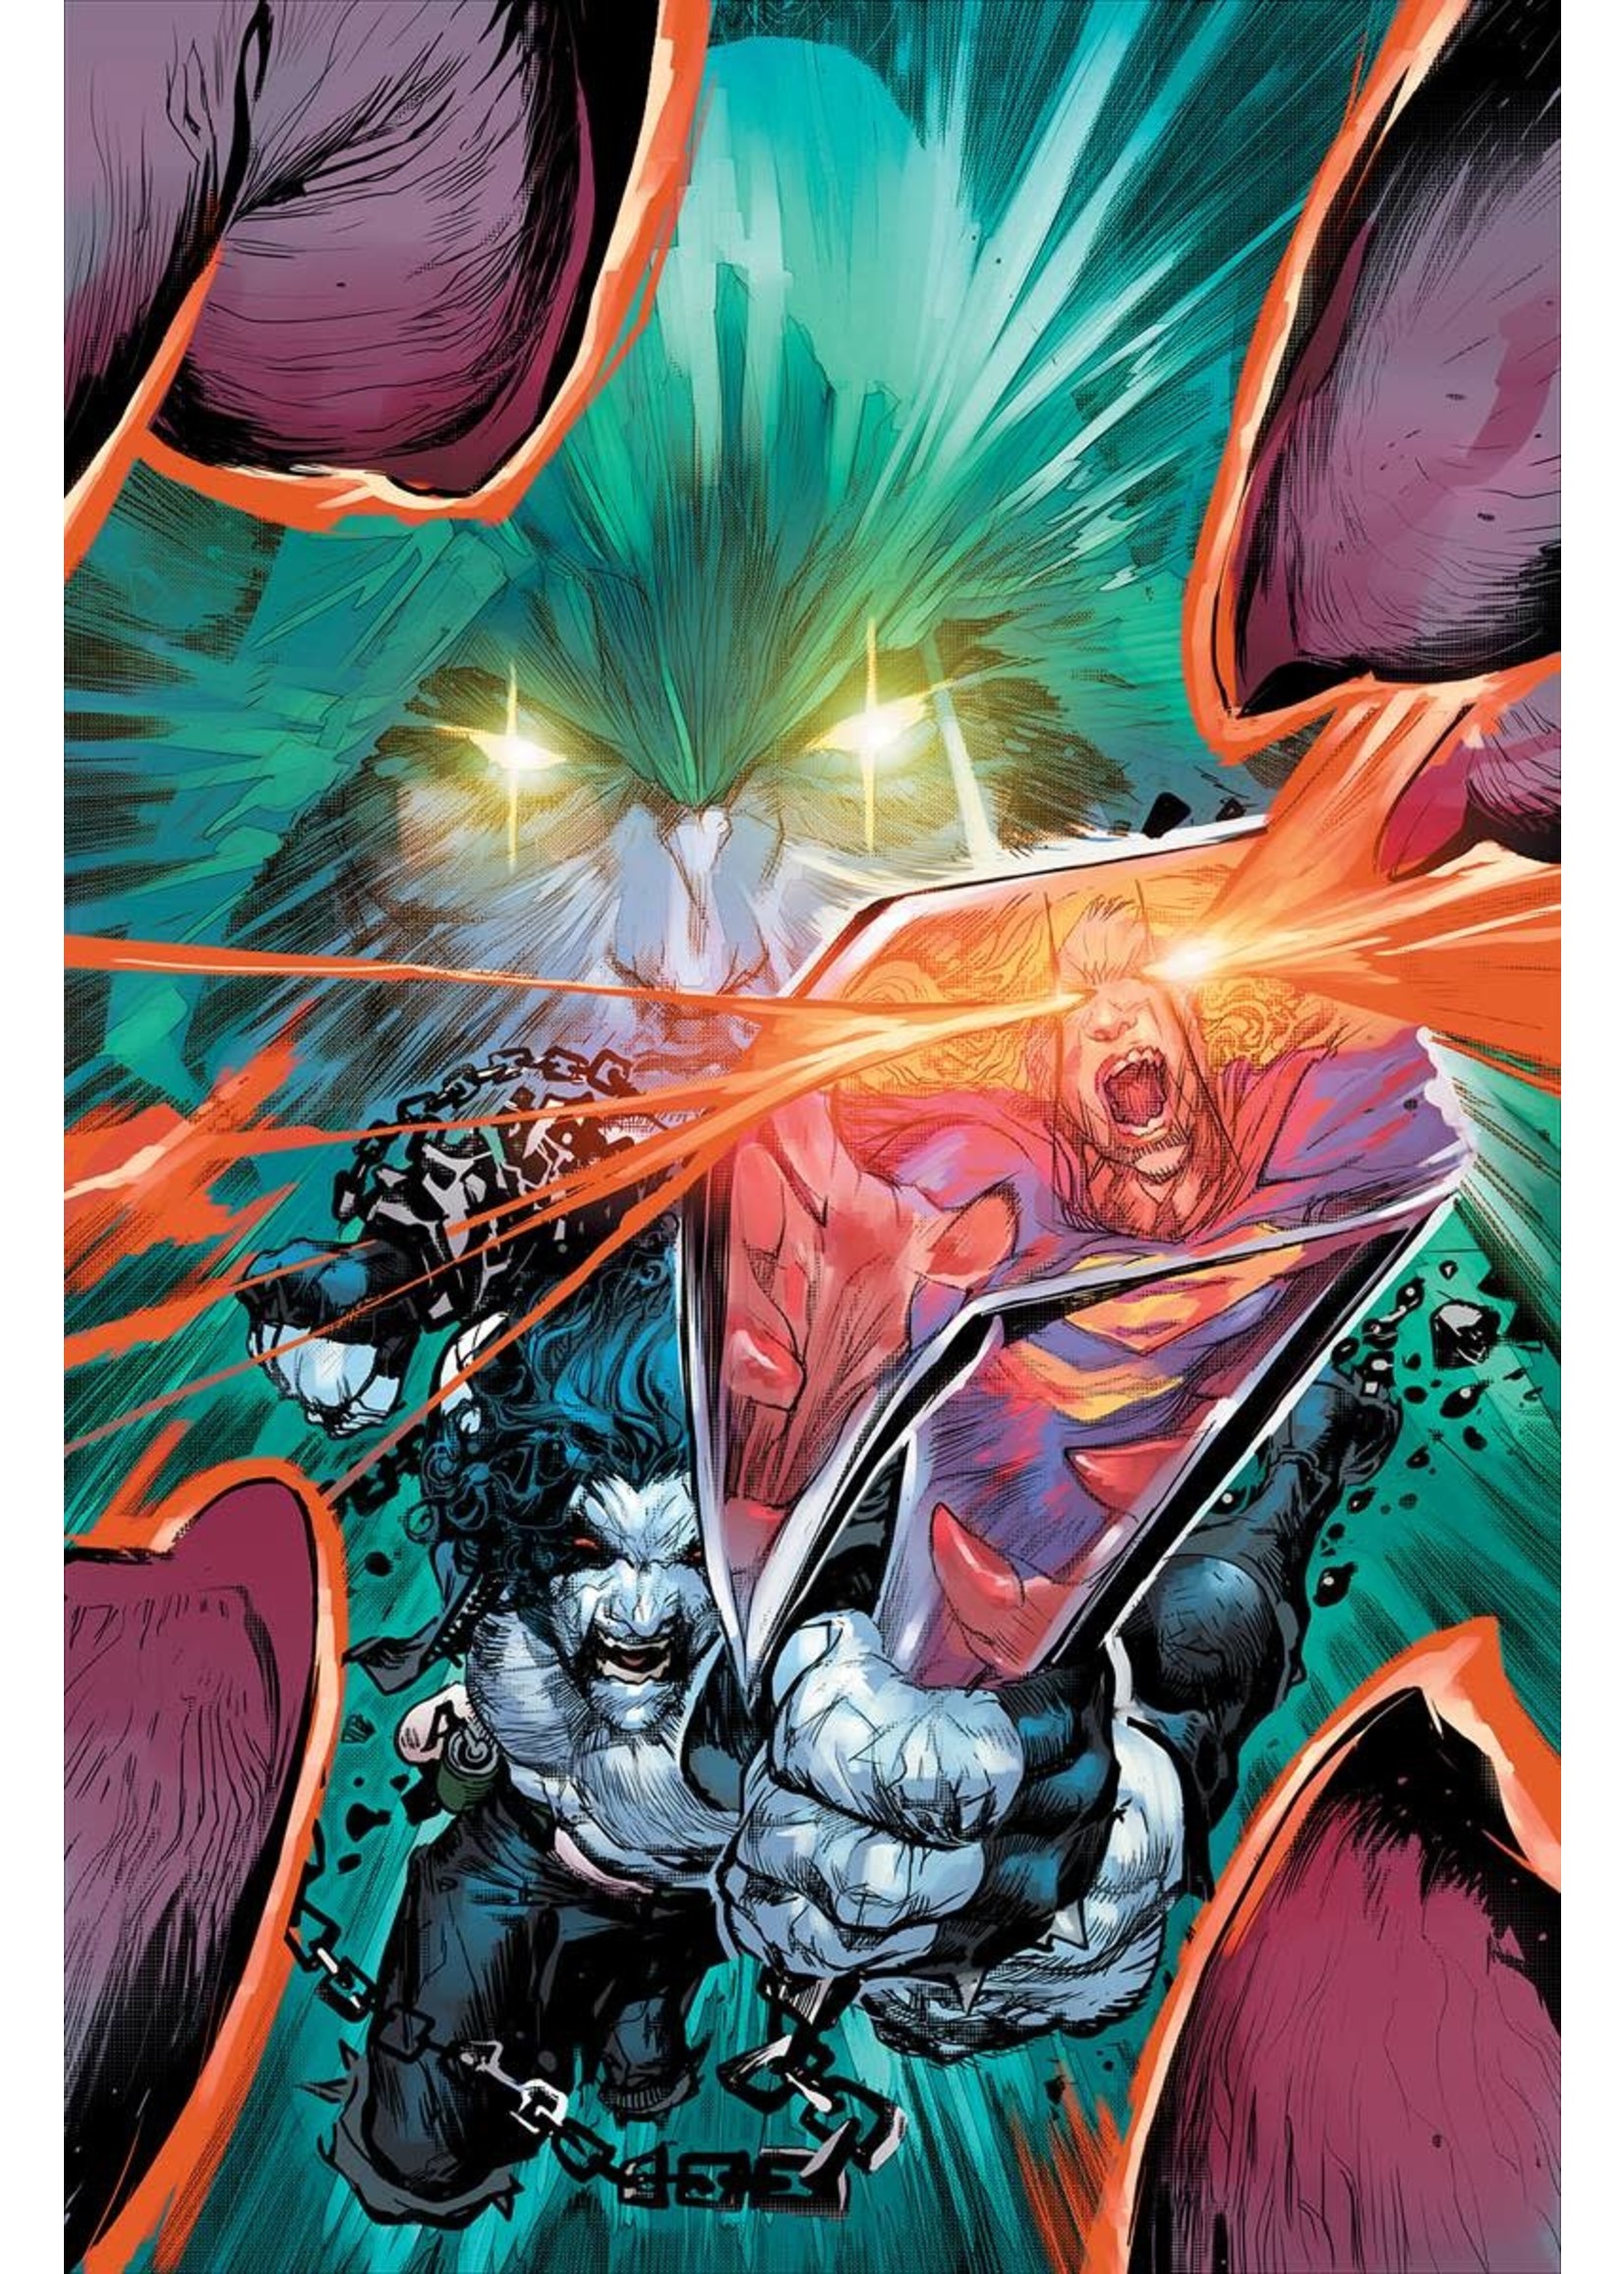 DC COMICS DCEASED WAR OF THE UNDEAD GODS #5 (OF 8) CVR A